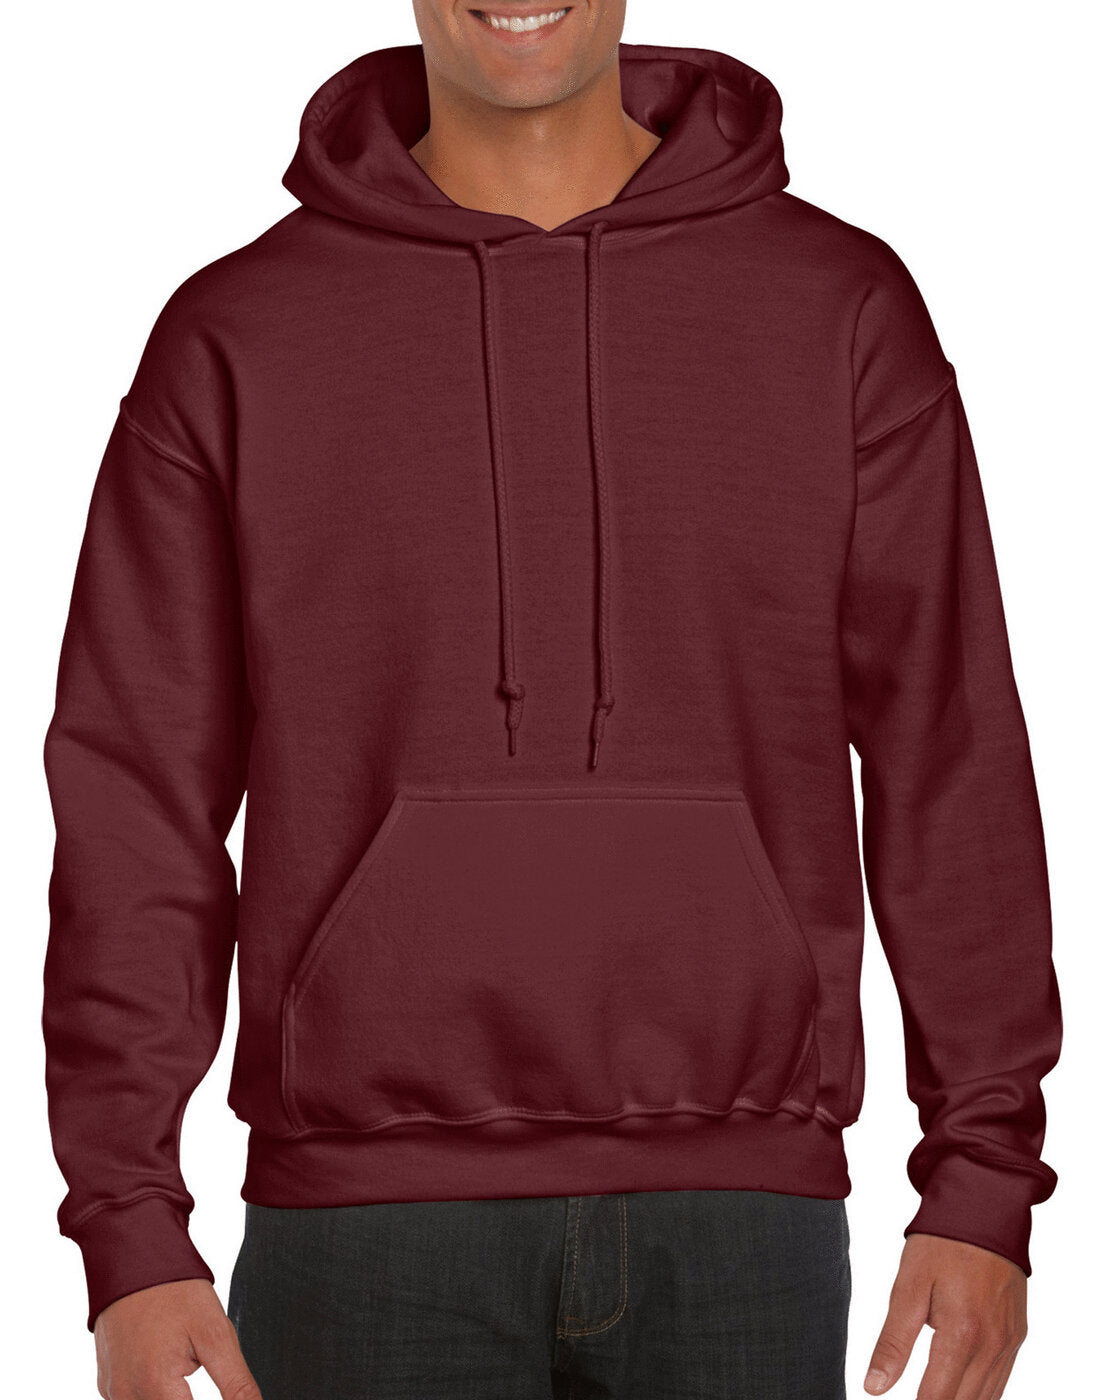 Gildan Dryblend Adult Hooded Sweatshirt - Maroon